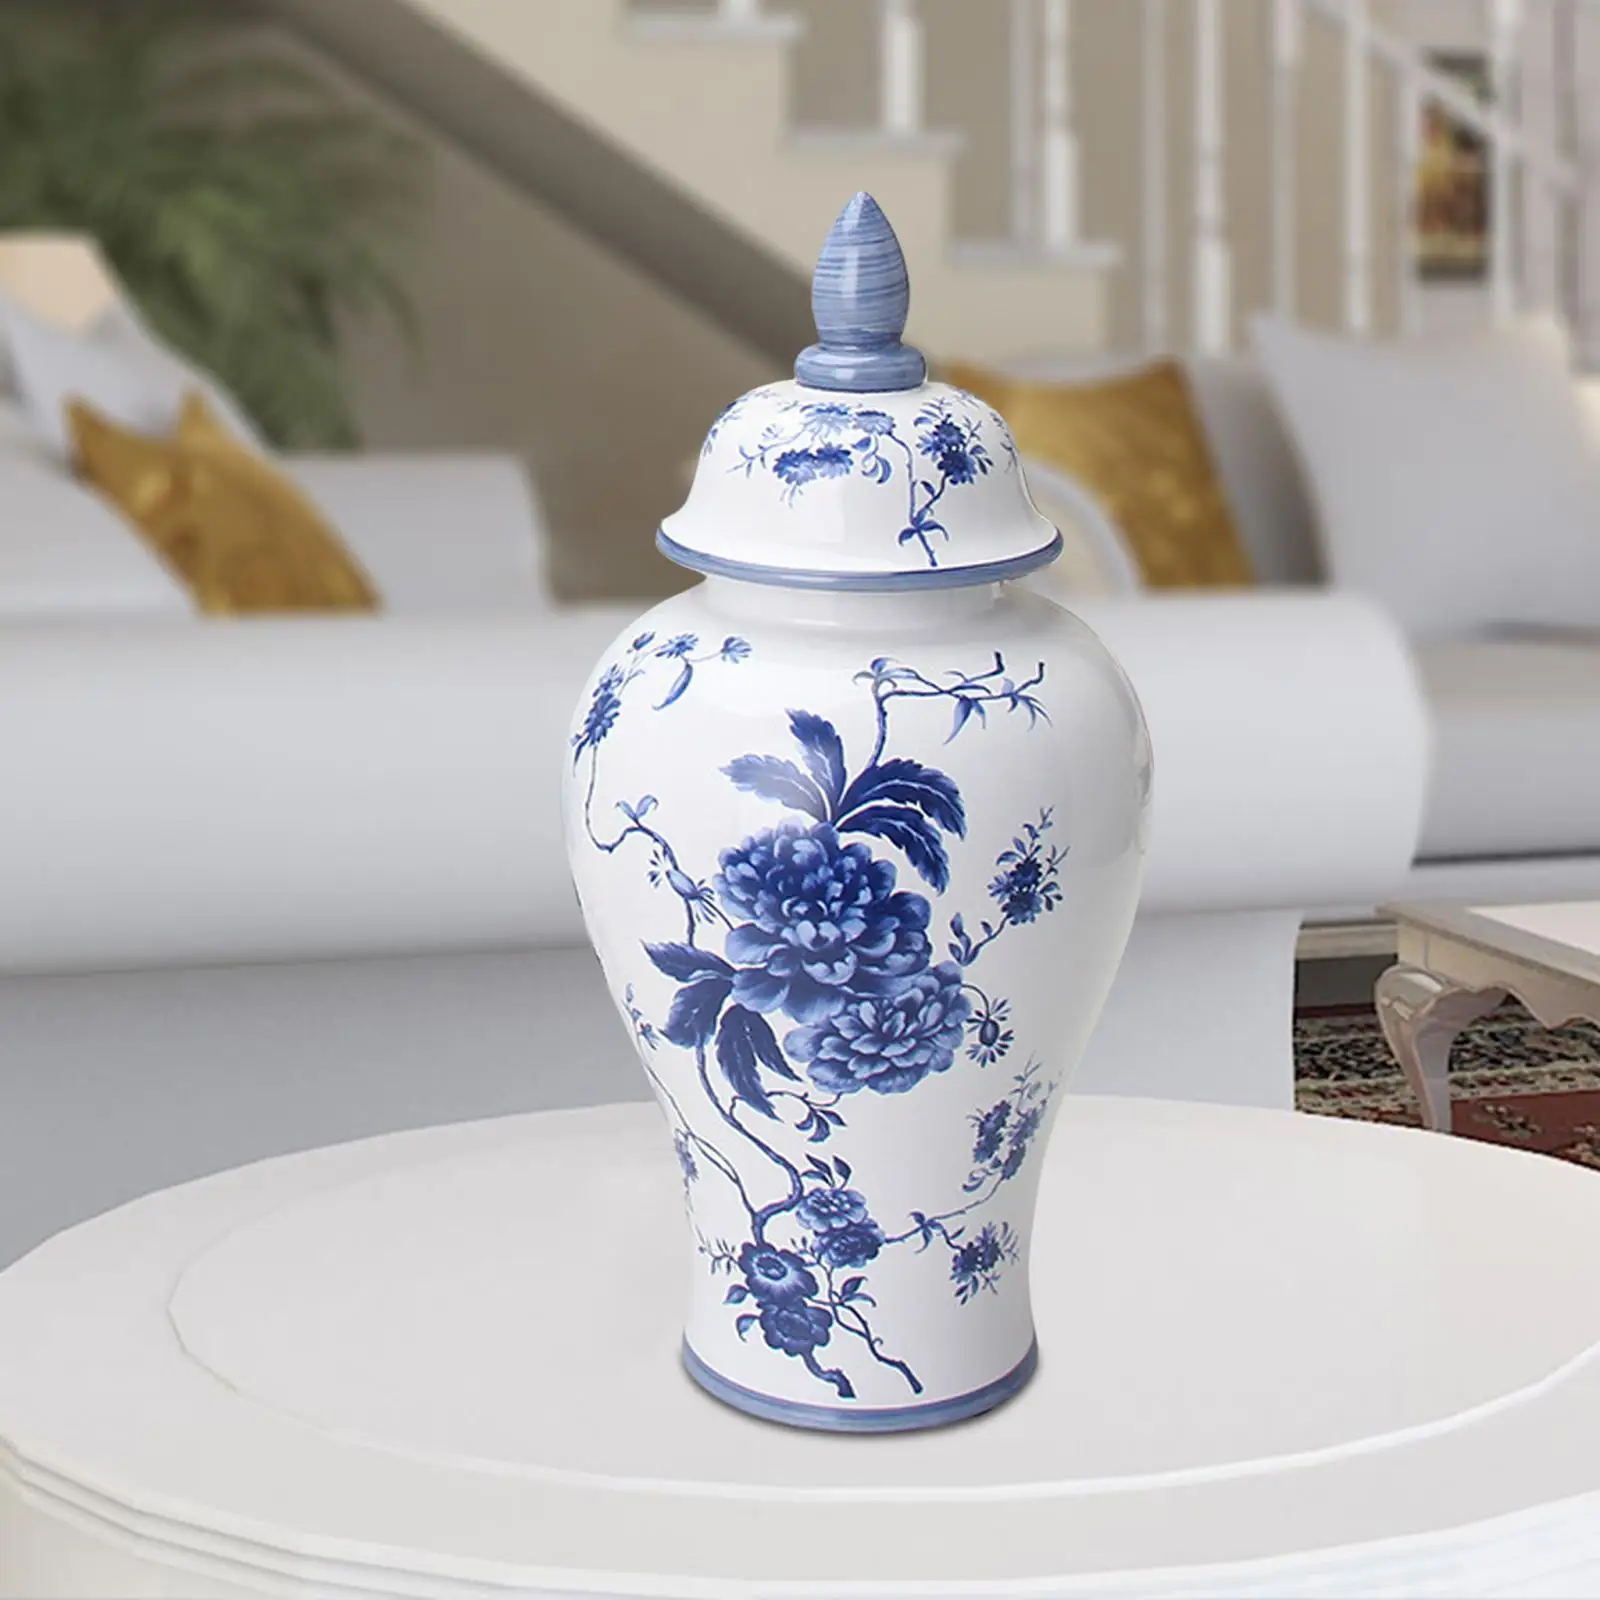 Blue and White Ceramic Glazed Temple Jar Vase Home Decoration Oriental Style